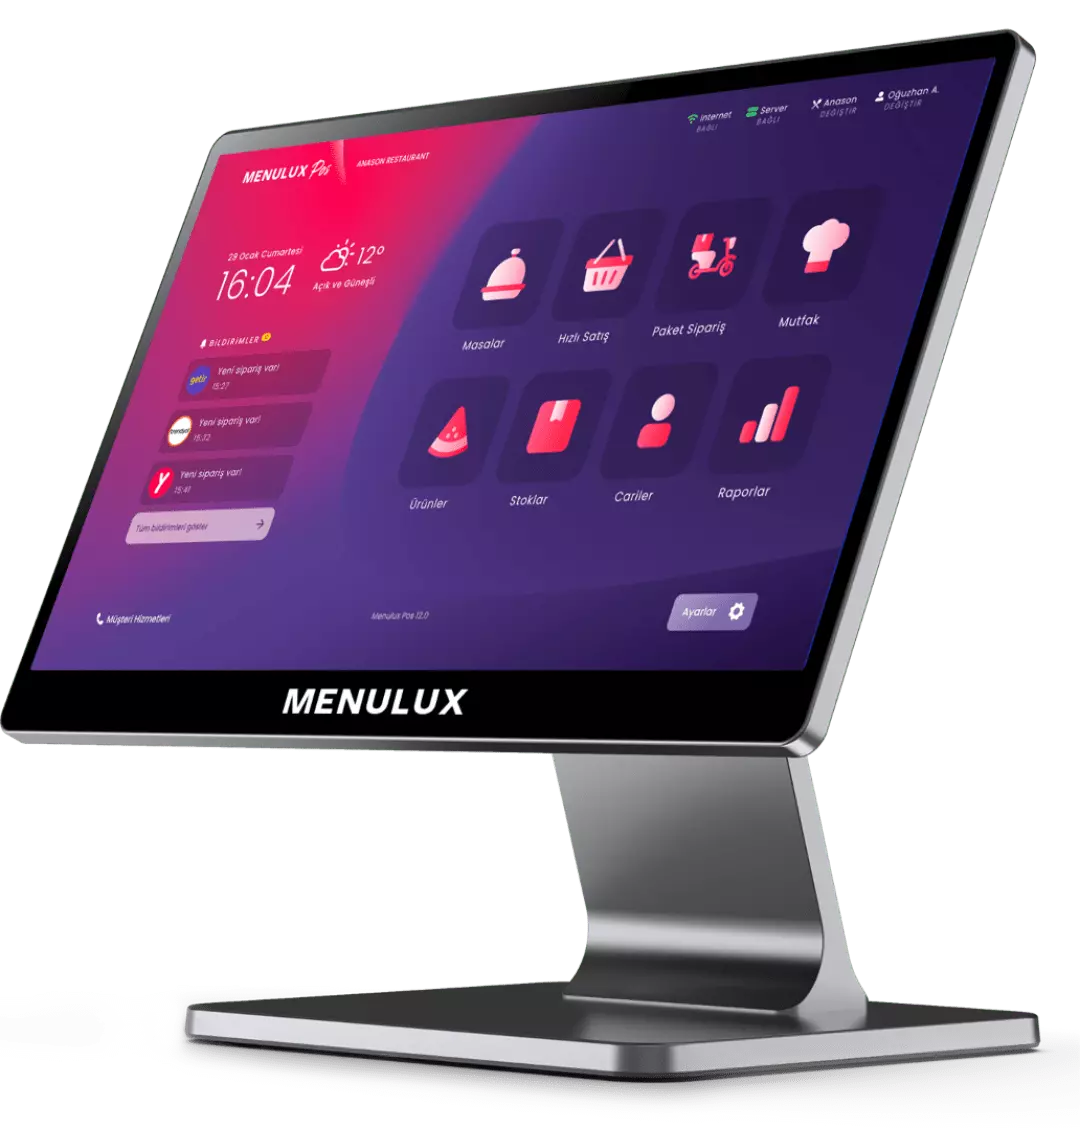 Menulux POS System - Dashboard screen